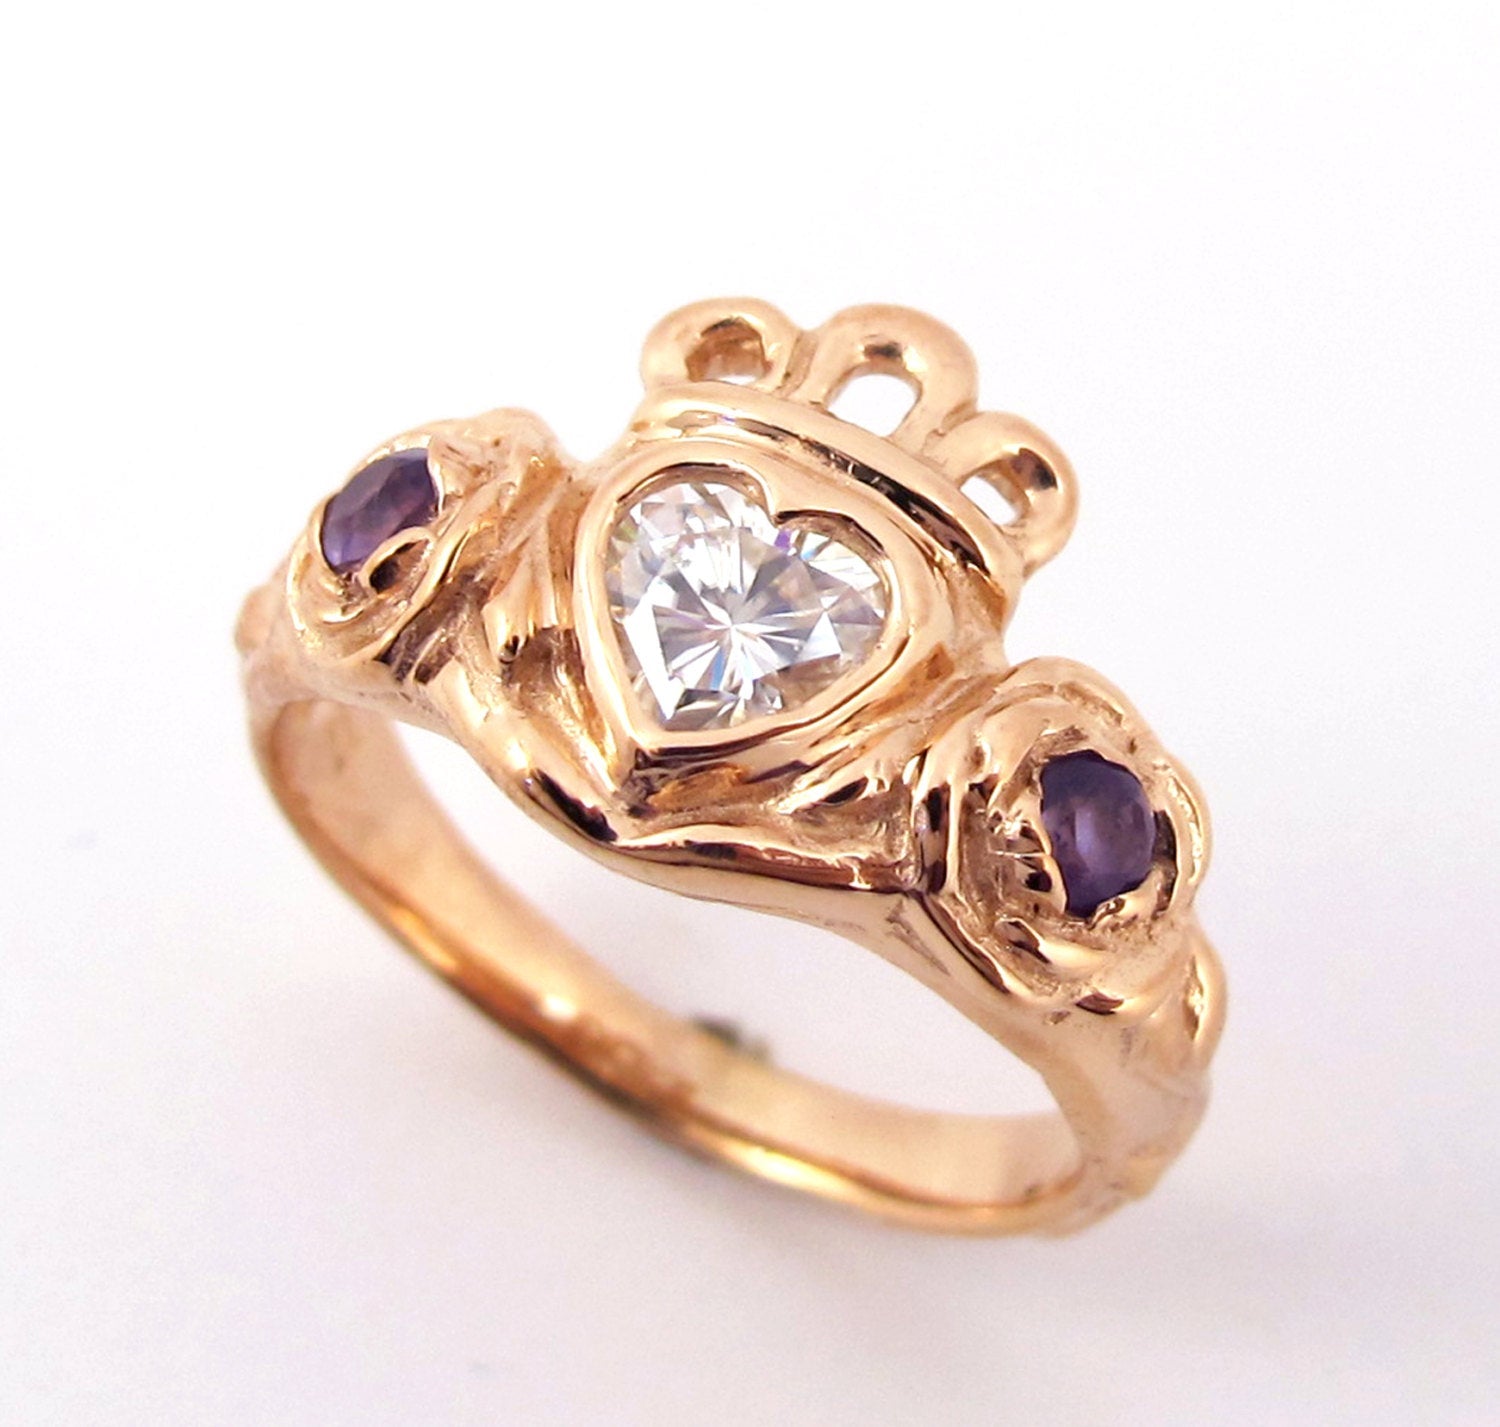 Irish Rose Ring - Gifts for Her Celtic Promise Roses Amethyst Heart Diamond Wedding Alternative Unique Sterling Silver Engagement Moissanite